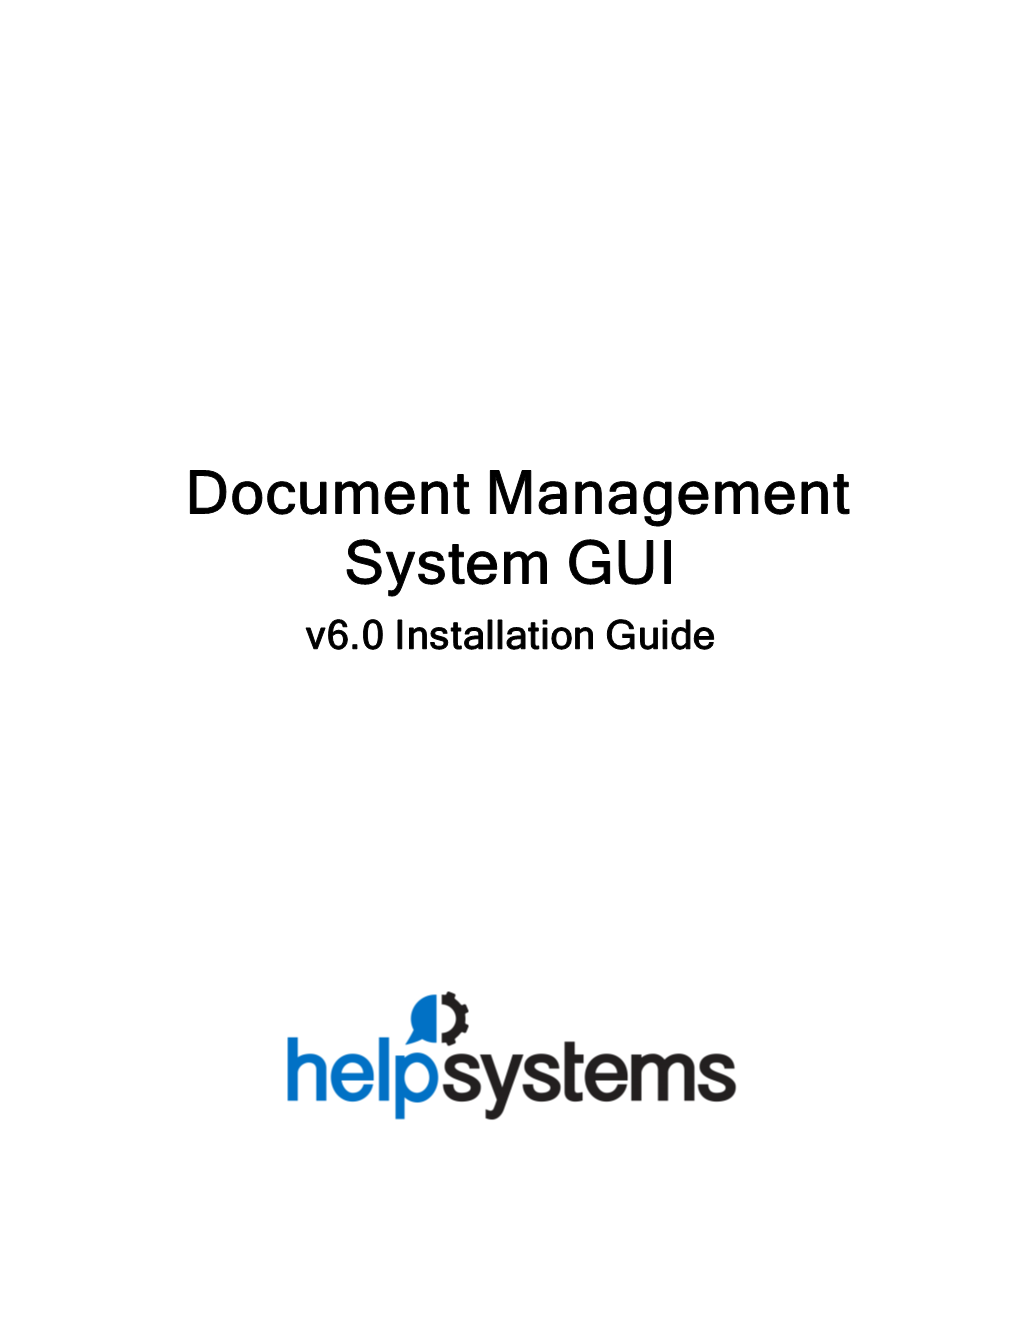 Document Management System GUI V6.0 Installation Guide Copyright Copyright © Helpsystems, LLC